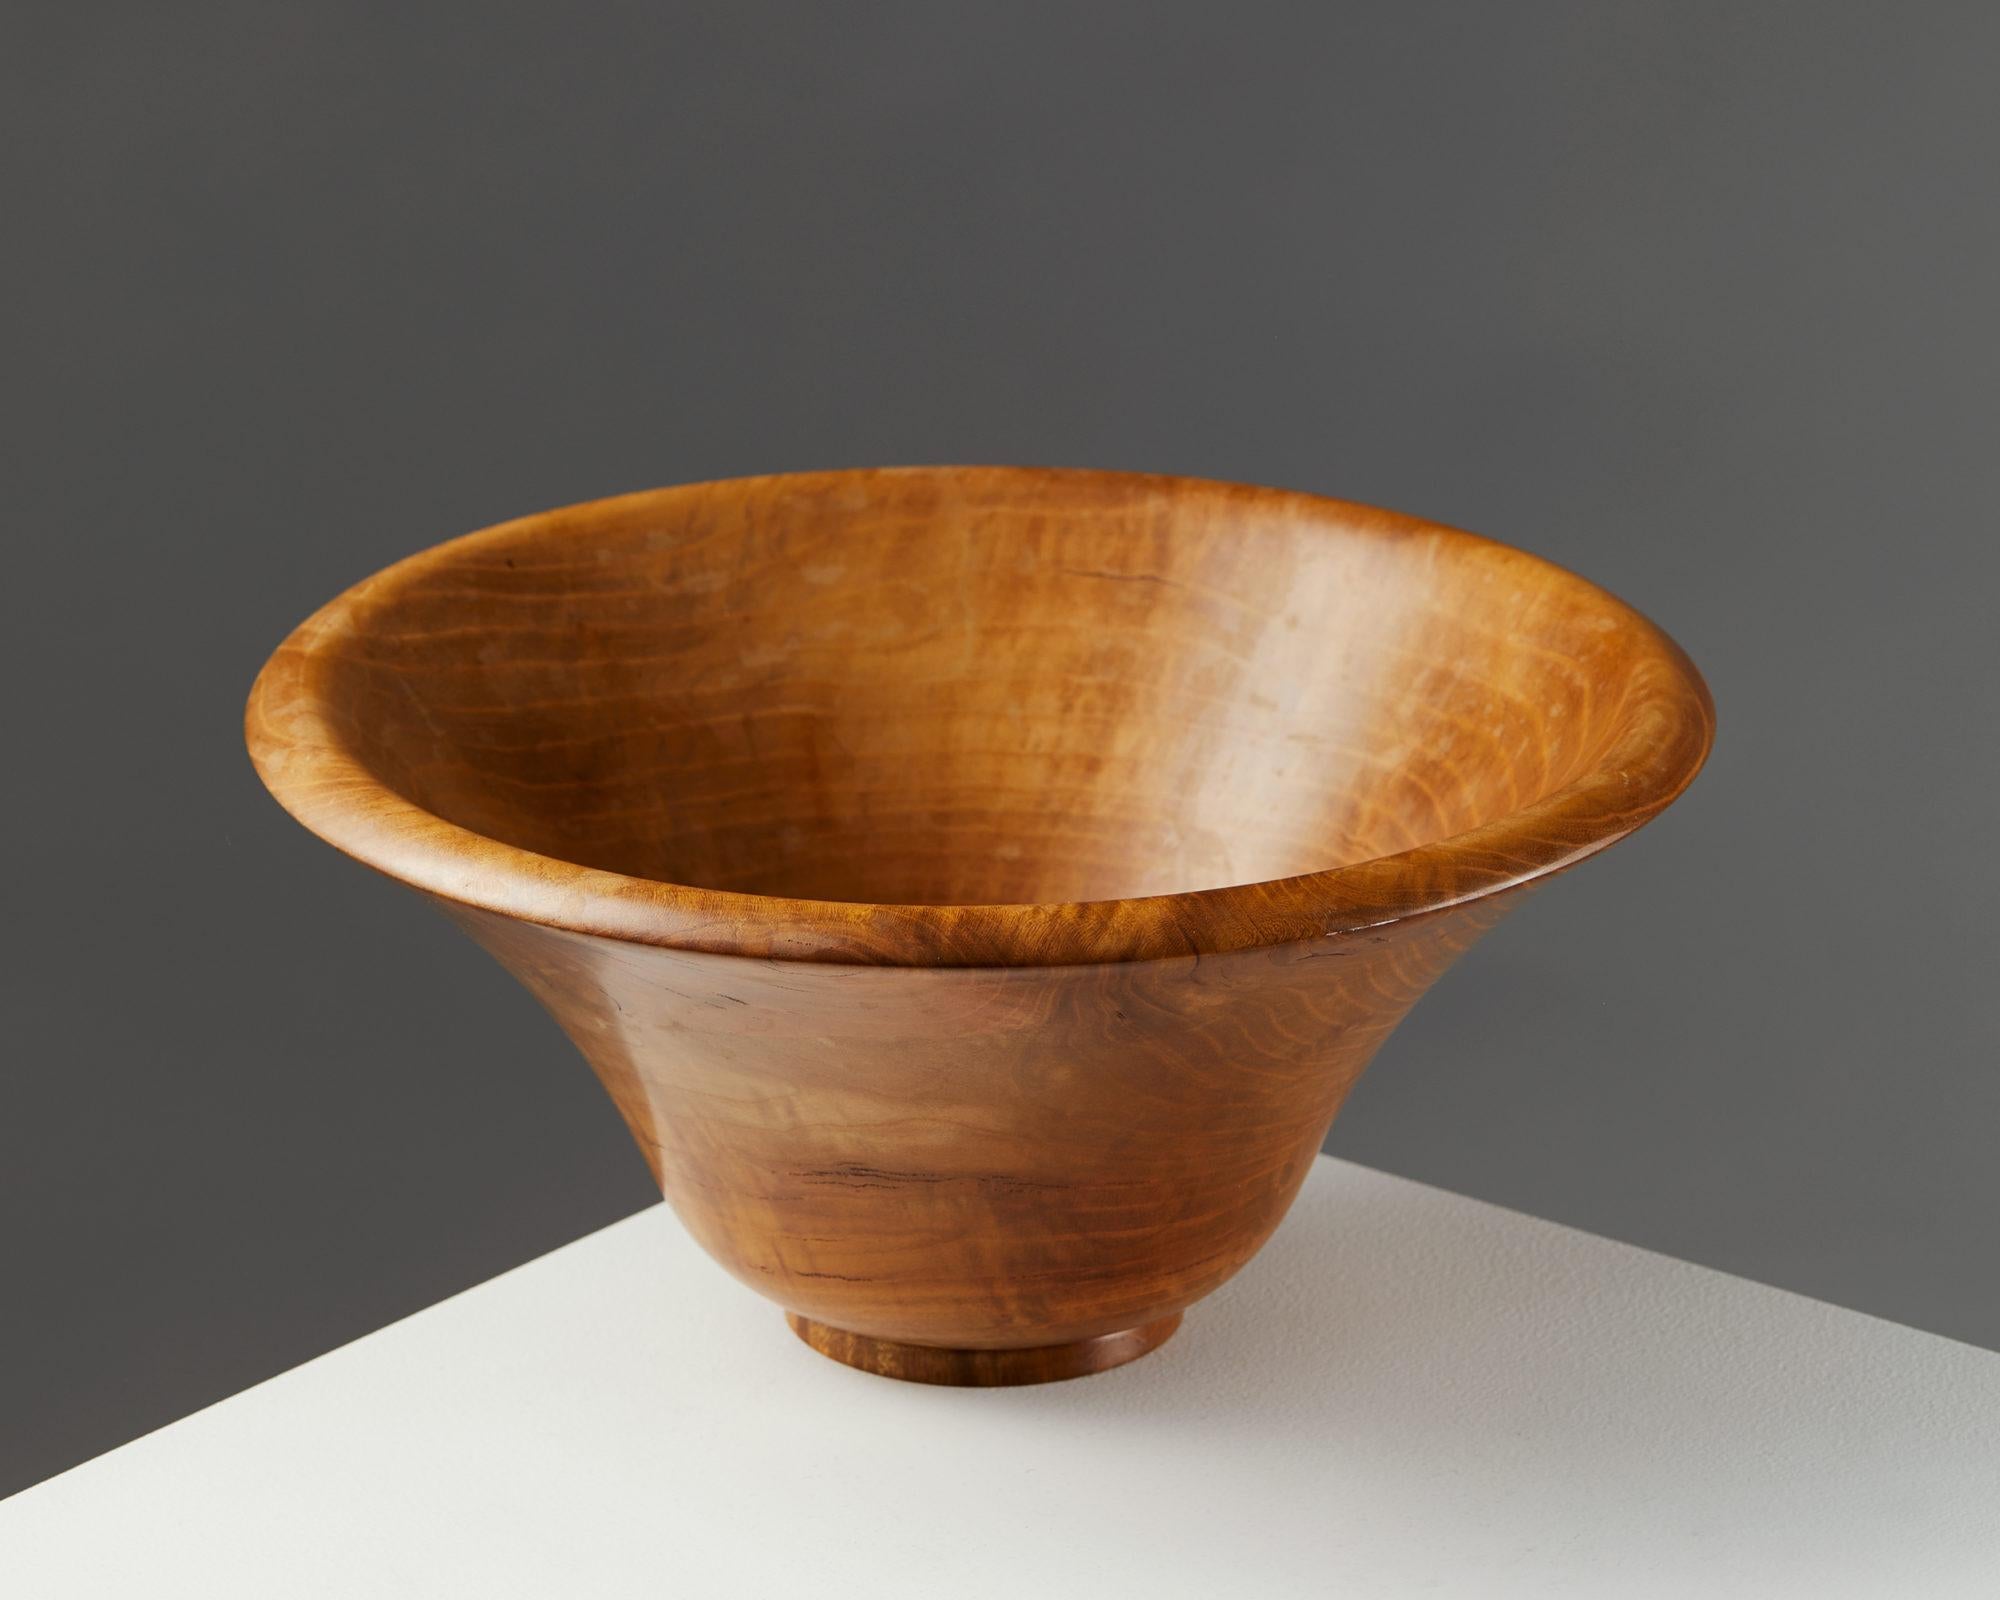 Bowl designed by Johnny Mattsson, Sweden, 1950s.
Teak.

Measures: H 23 cm / 9